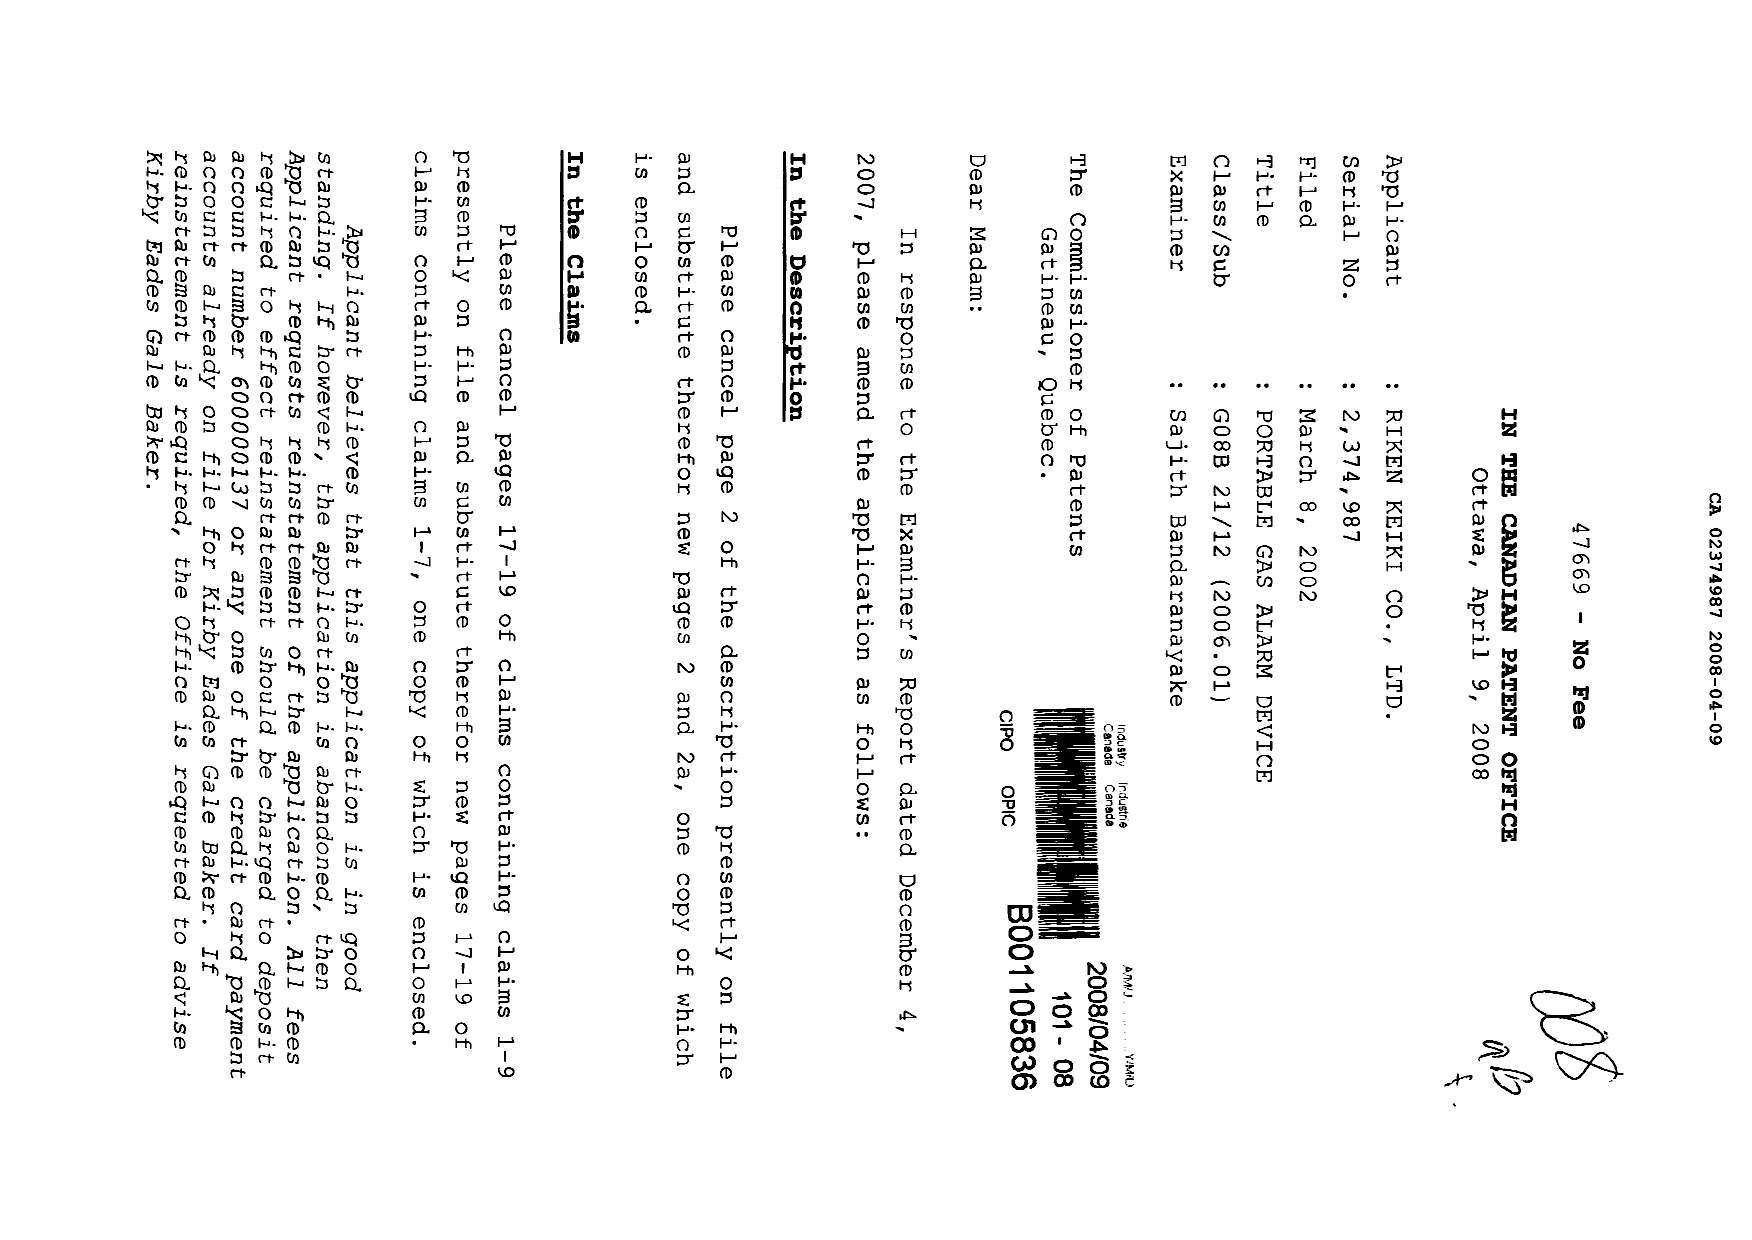 Canadian Patent Document 2374987. Prosecution-Amendment 20080409. Image 1 of 10